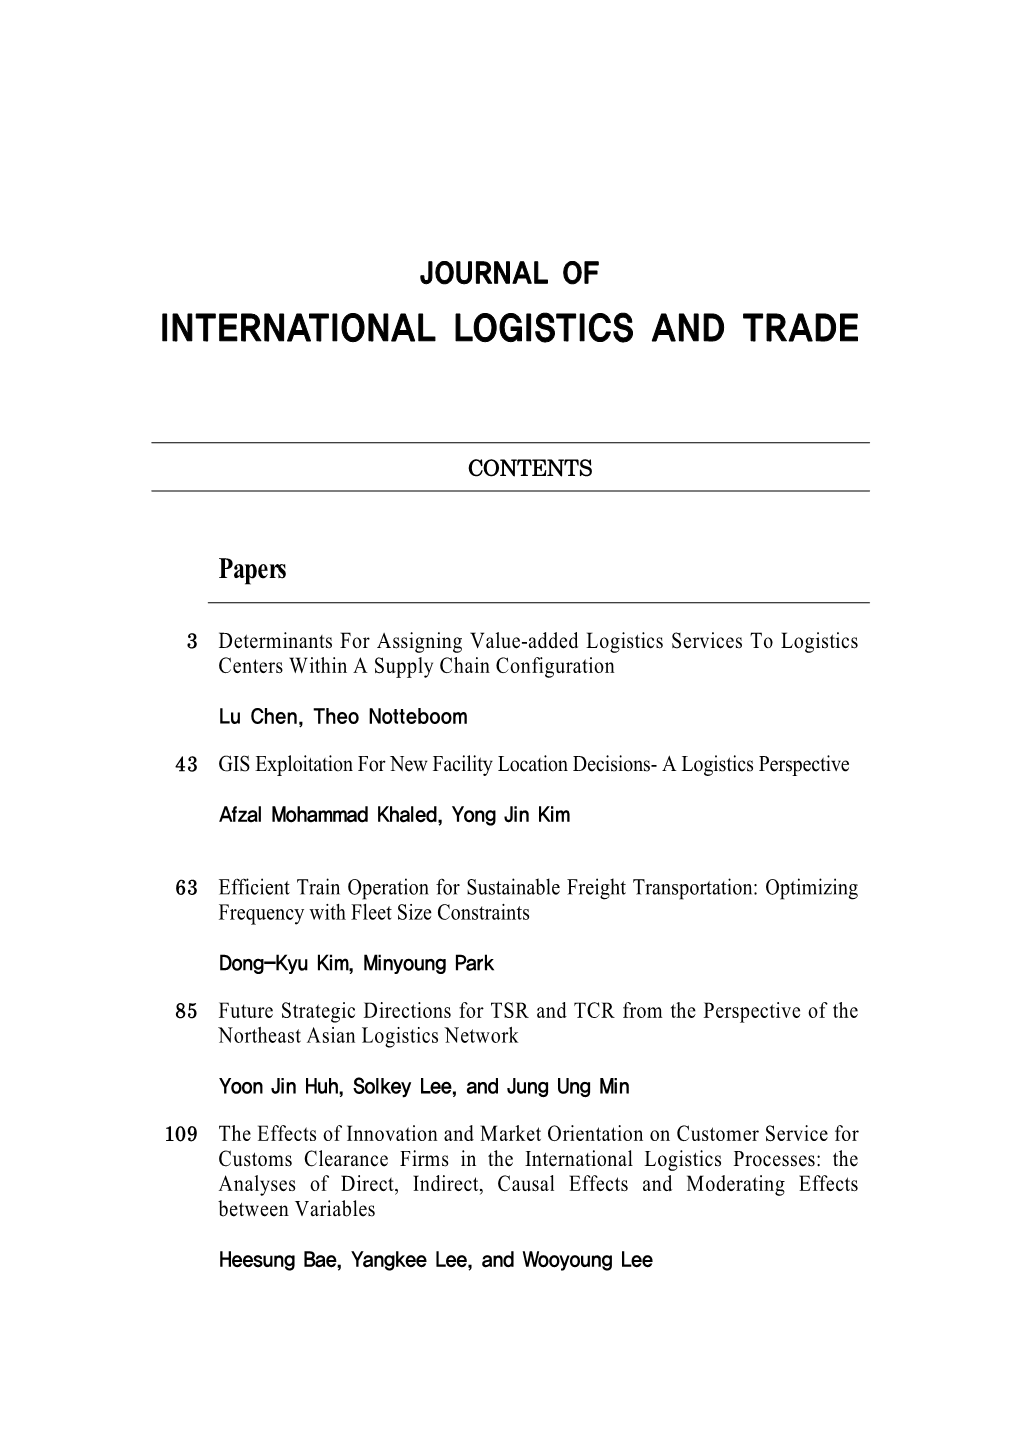 International Logistics and Trade